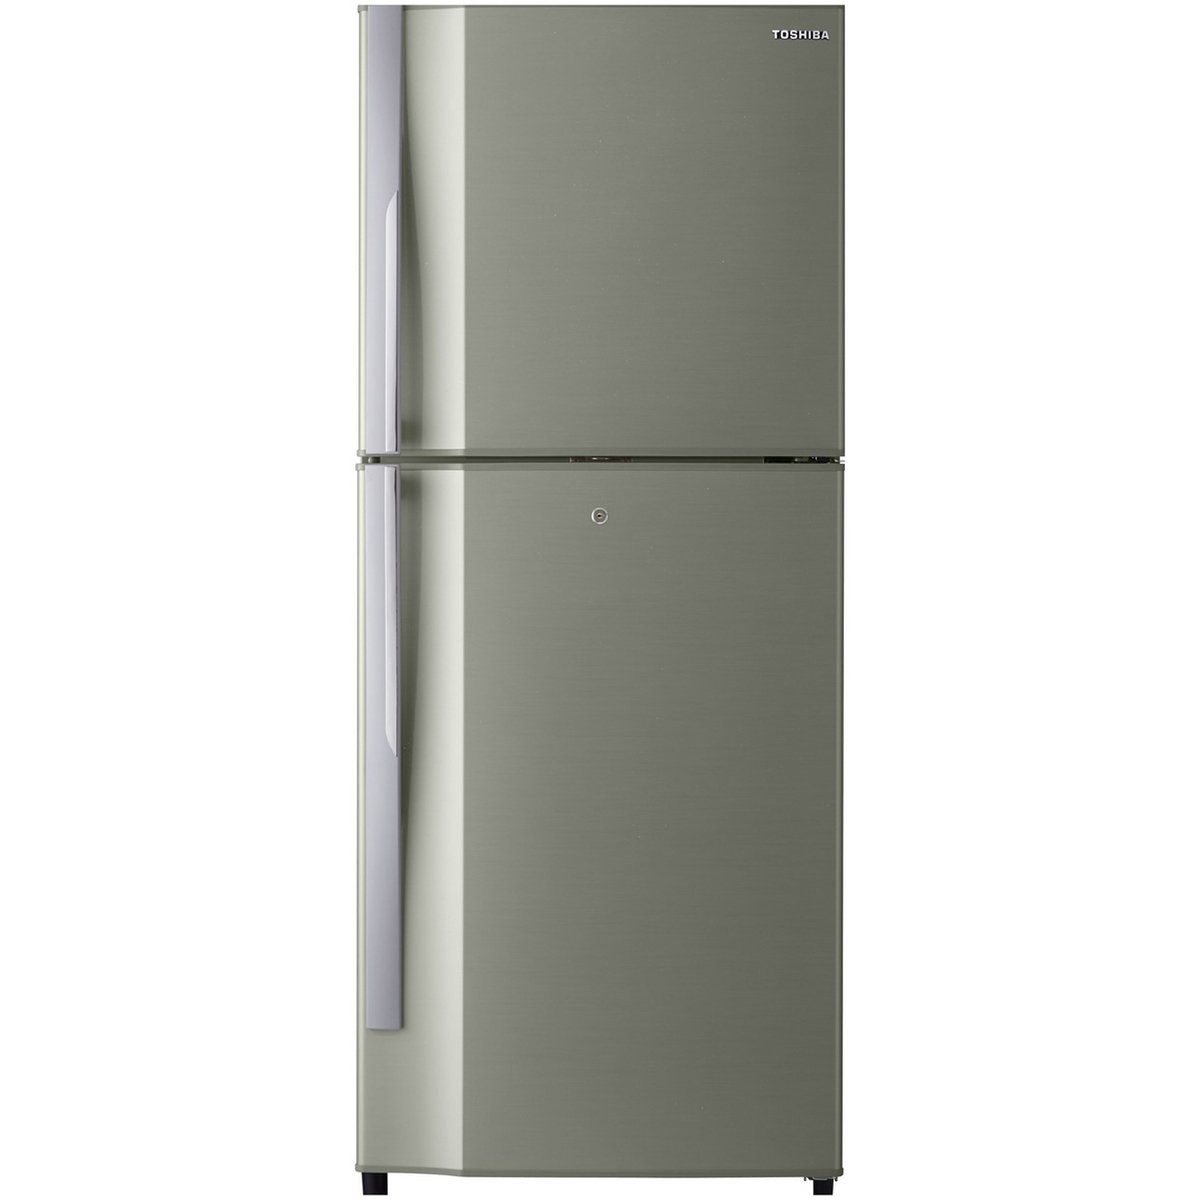 Toshiba Double Door Refrigerator GR-S33UB 290Ltr